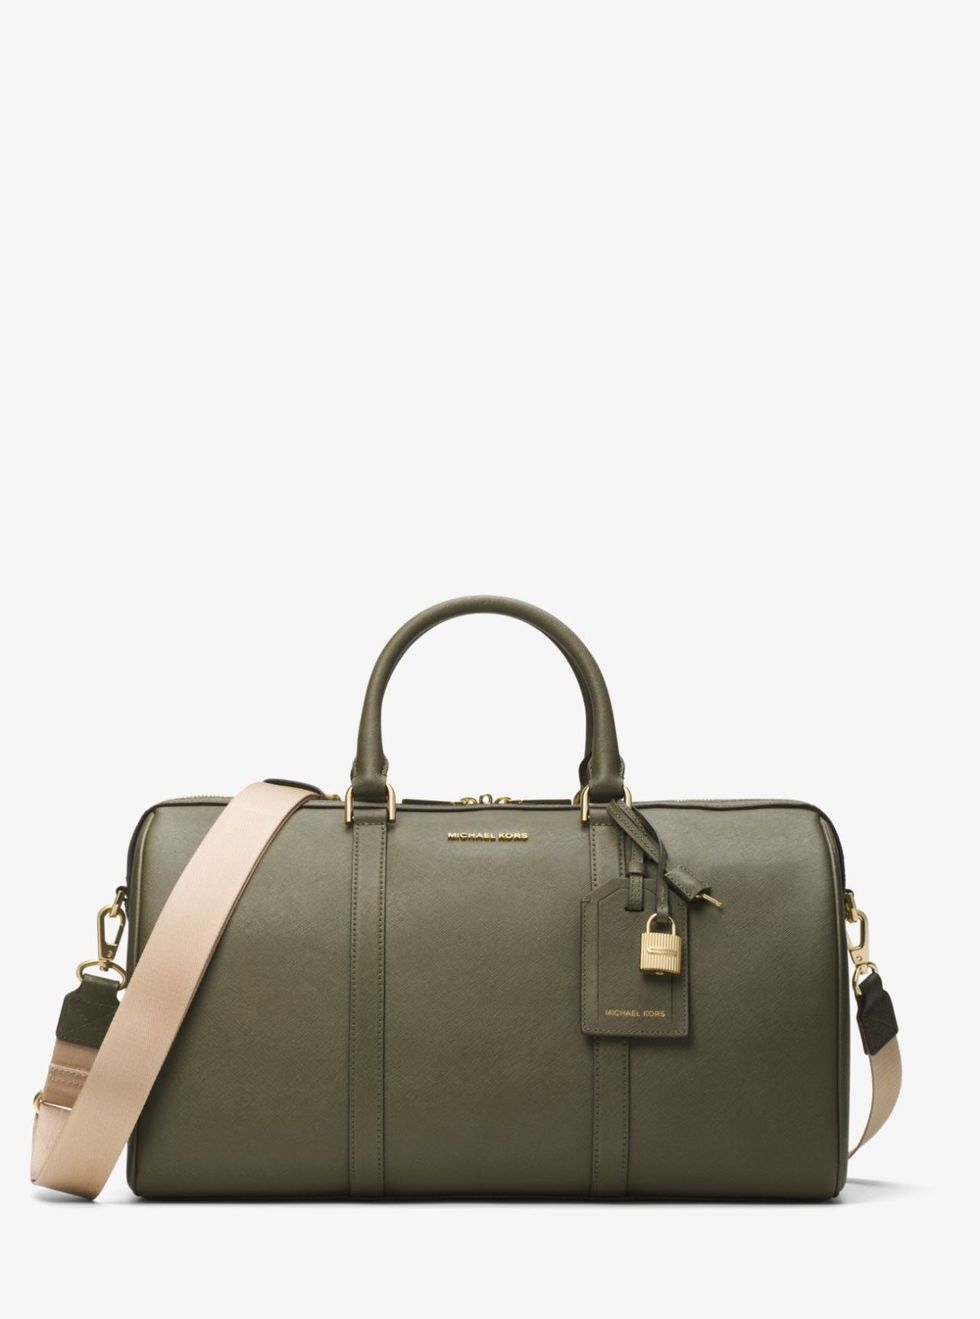 Brown, Bag, Style, Luggage and bags, Leather, Shoulder bag, Fashion, Travel, Khaki, Tan, 